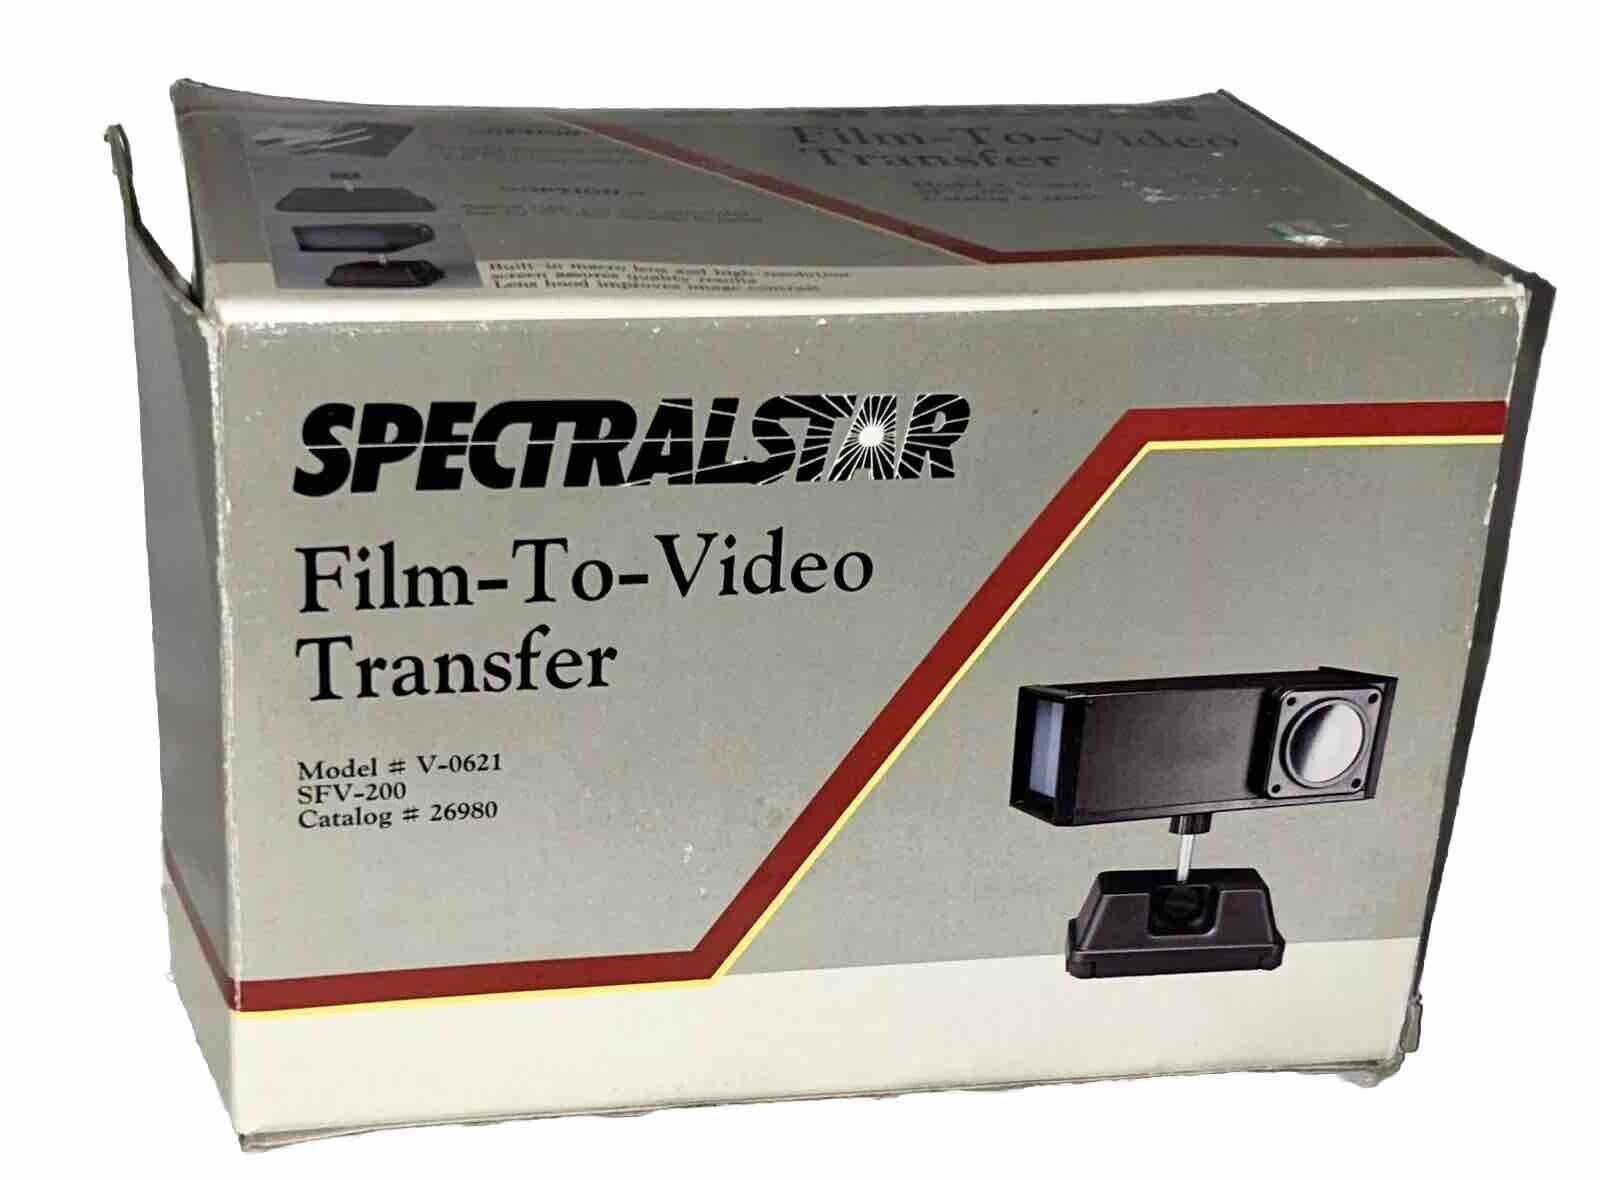 SPECTRALSTAR Film To Video Transfer Model # V-0621 SFV-200 Vintage Spectralstar SFV-200